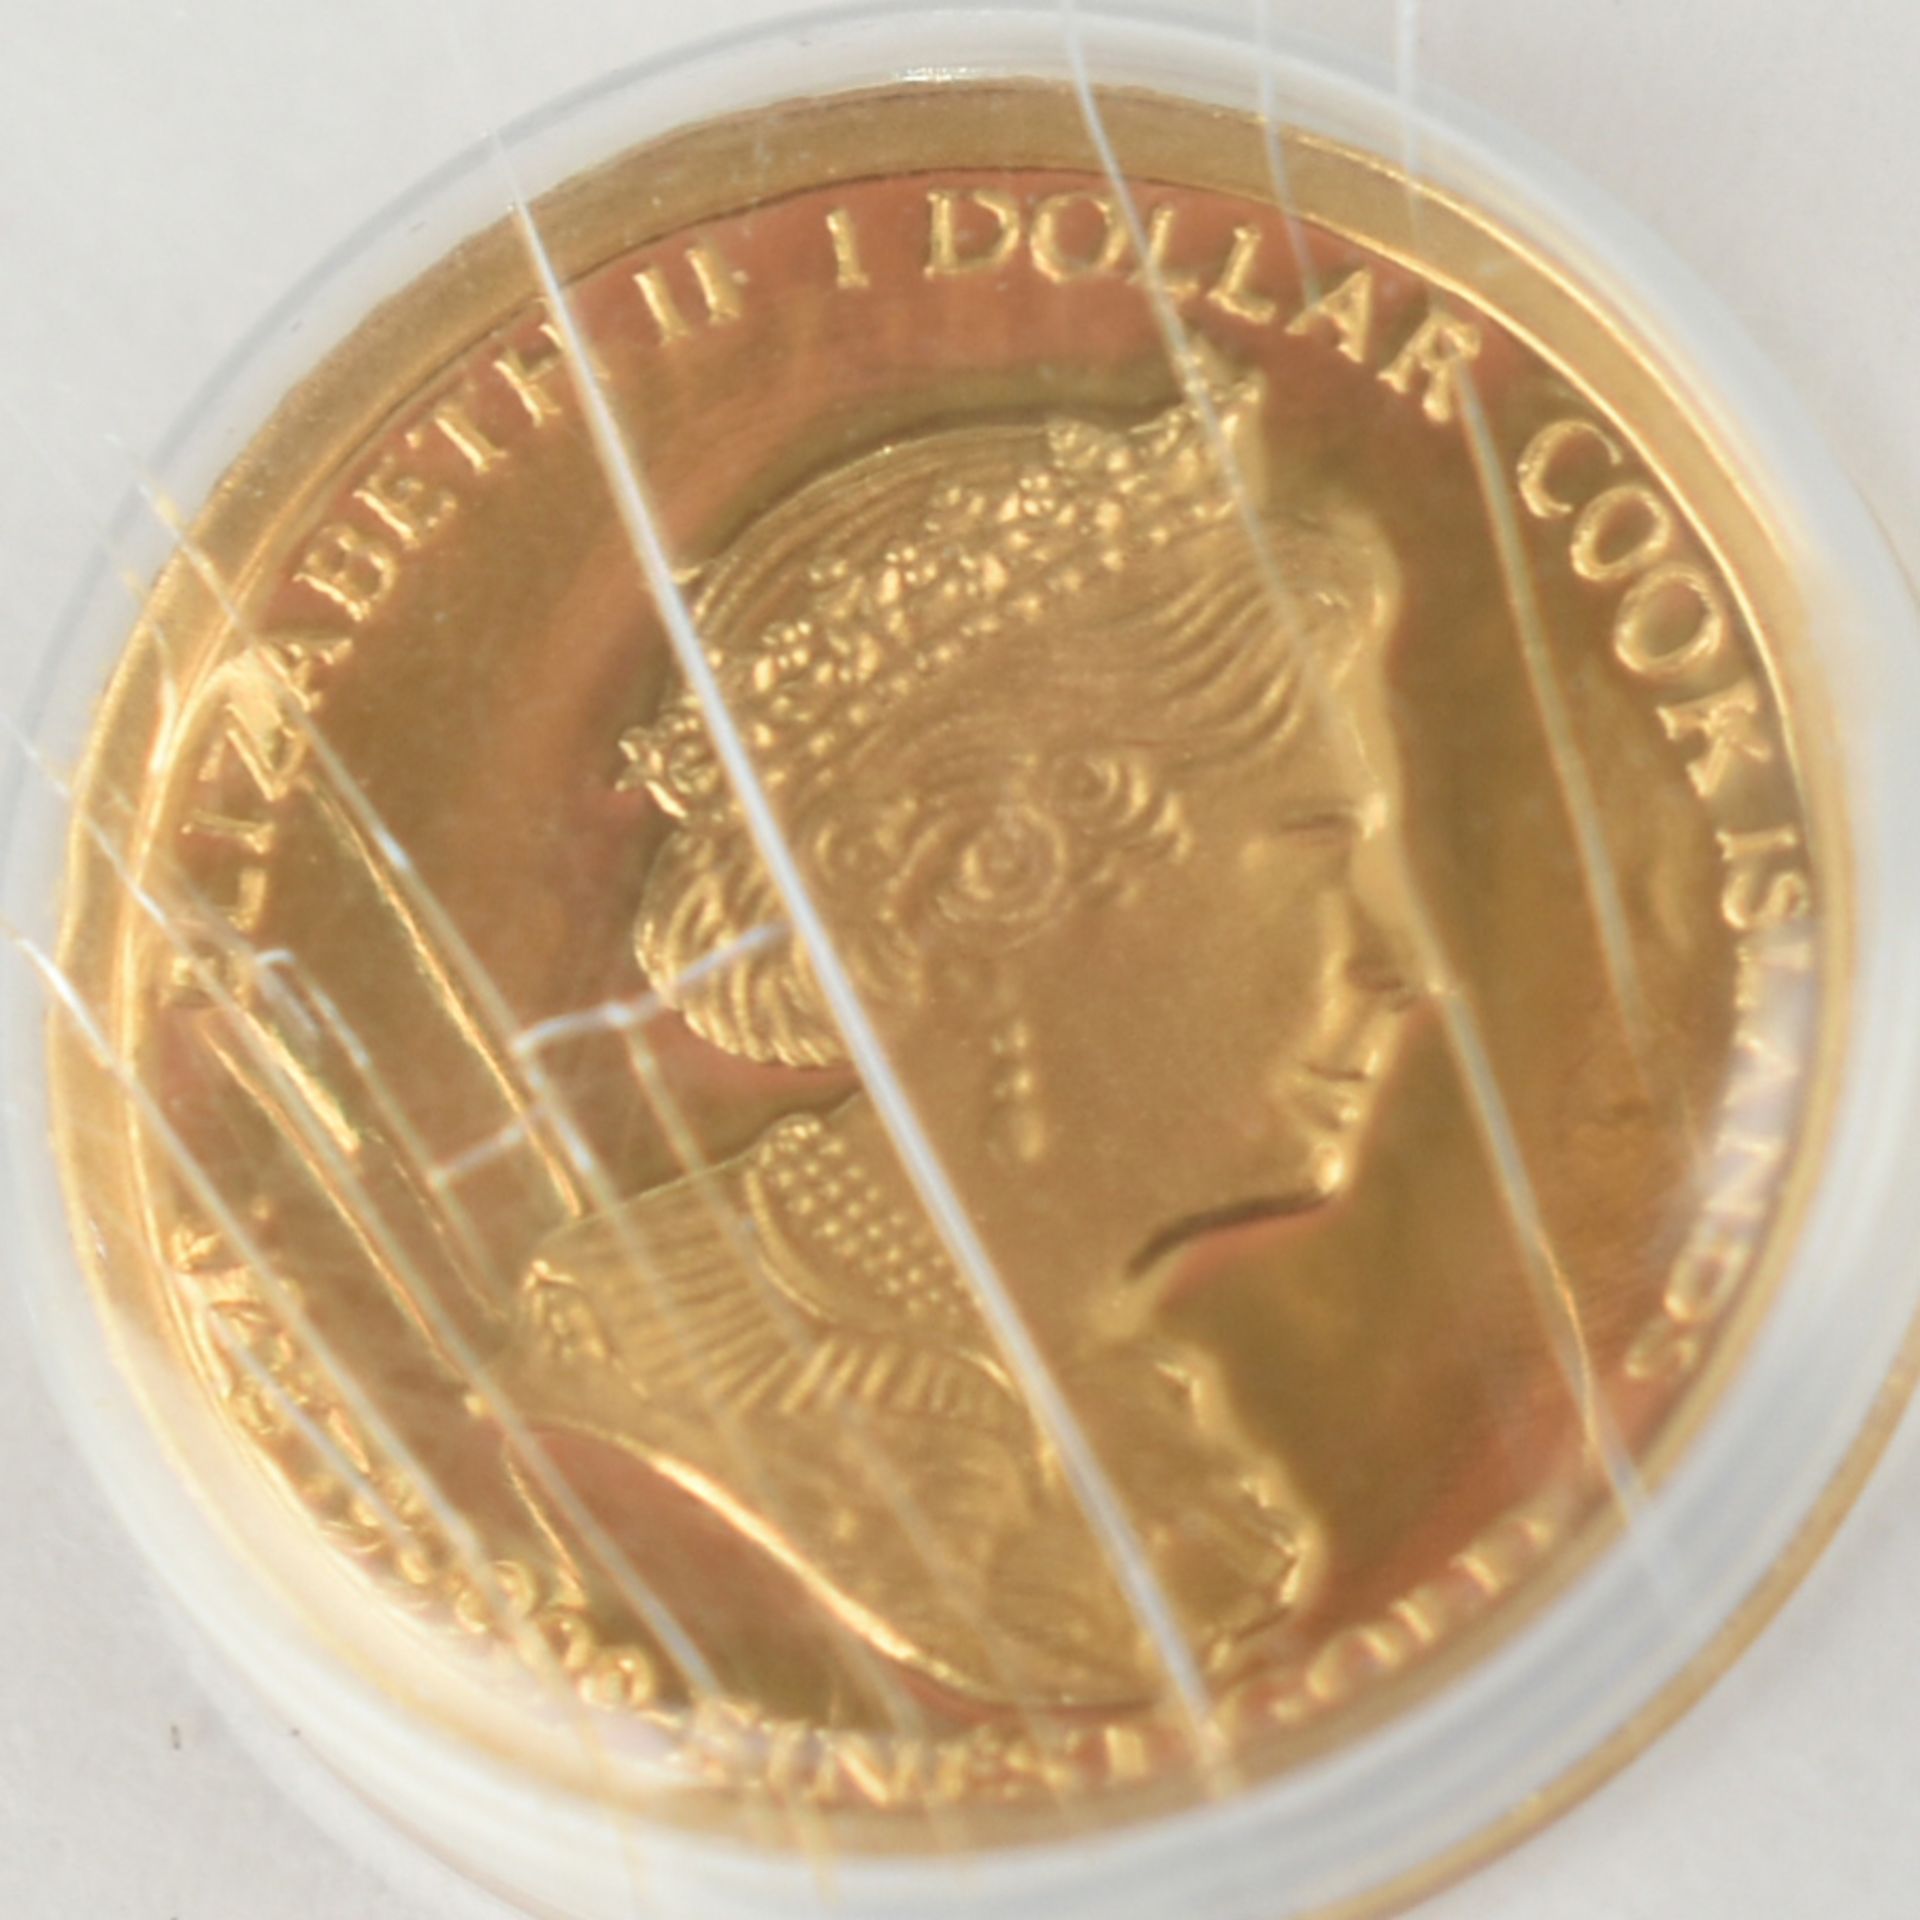 Goldmünze Cook-Inseln 2006 1 Dollar in Gold, 999/1000, 0,5 g, av. Königin Elisabeth II. Kopf rechts, - Bild 3 aus 3